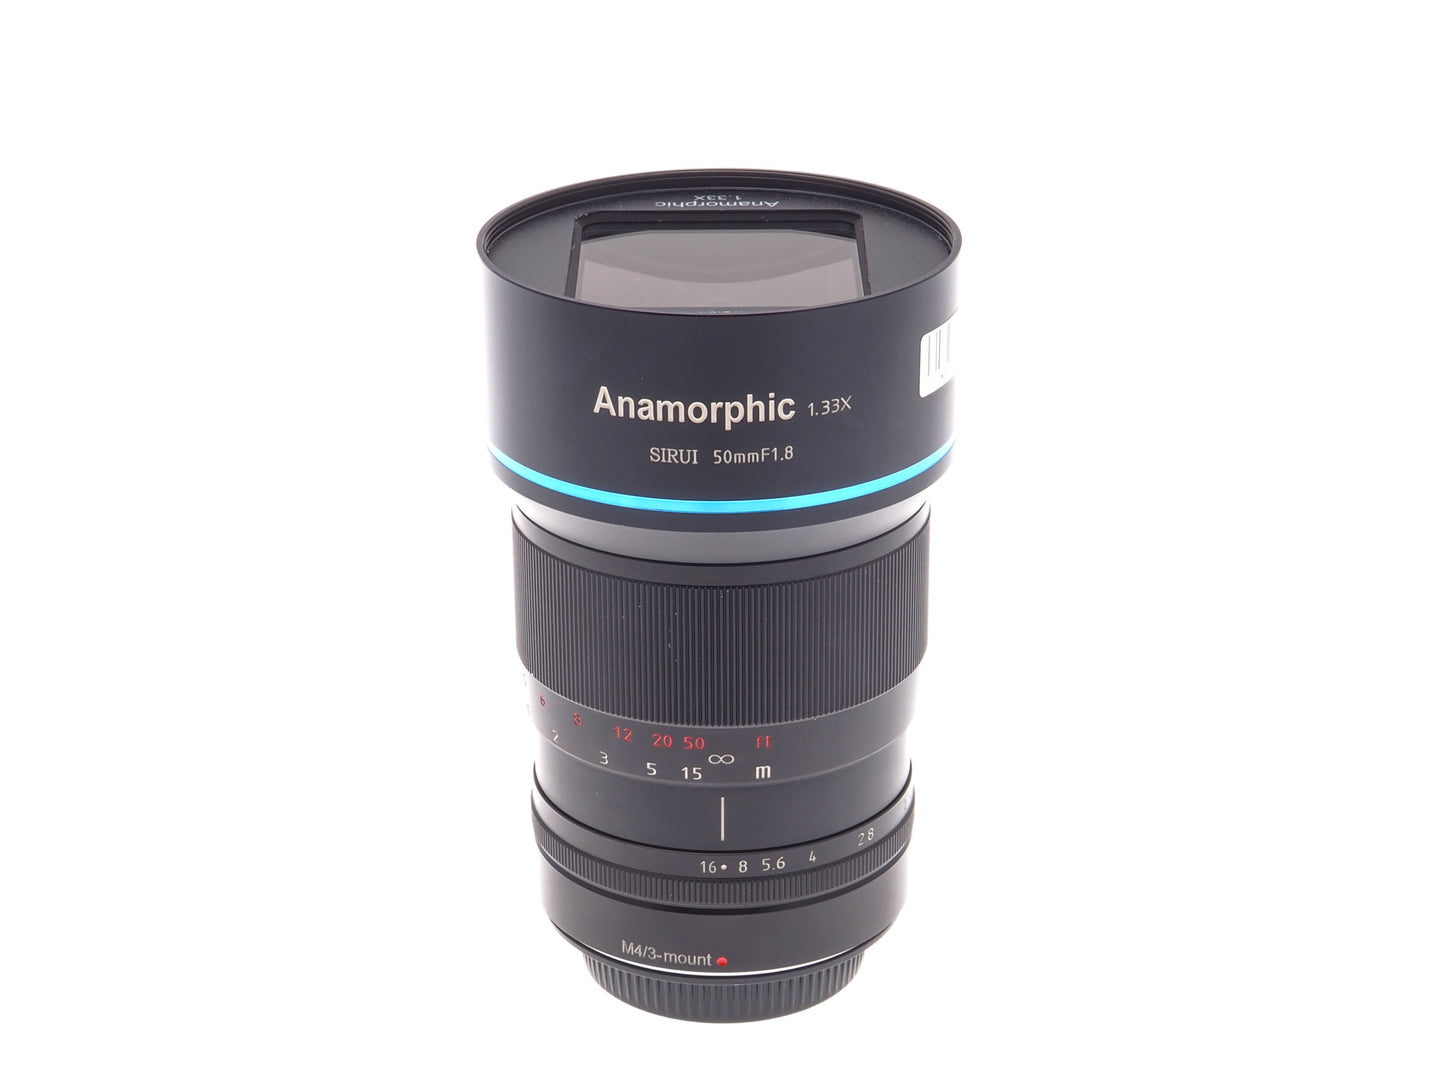 Sirui 50mm f1.8 Anamorphic 1.33x - Lens